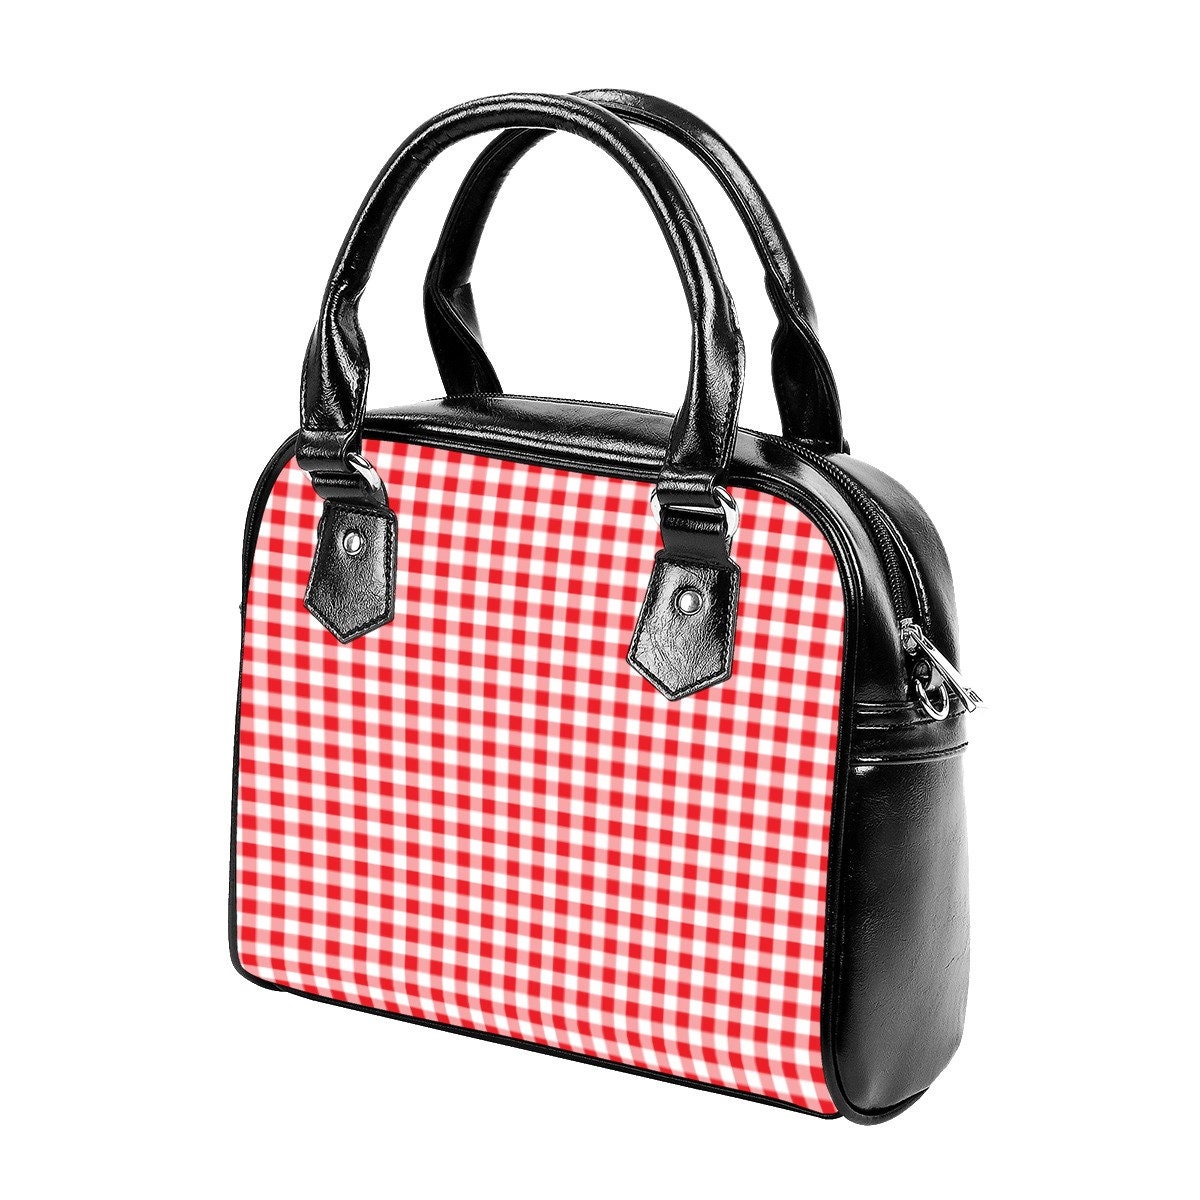 Red Gingham Handbag, 50s Style Bag, Red Handbag, Retro Bag, Retro Handbag, Red Gingham Purse,Women's Bags,Women's Purse,Small Handbag